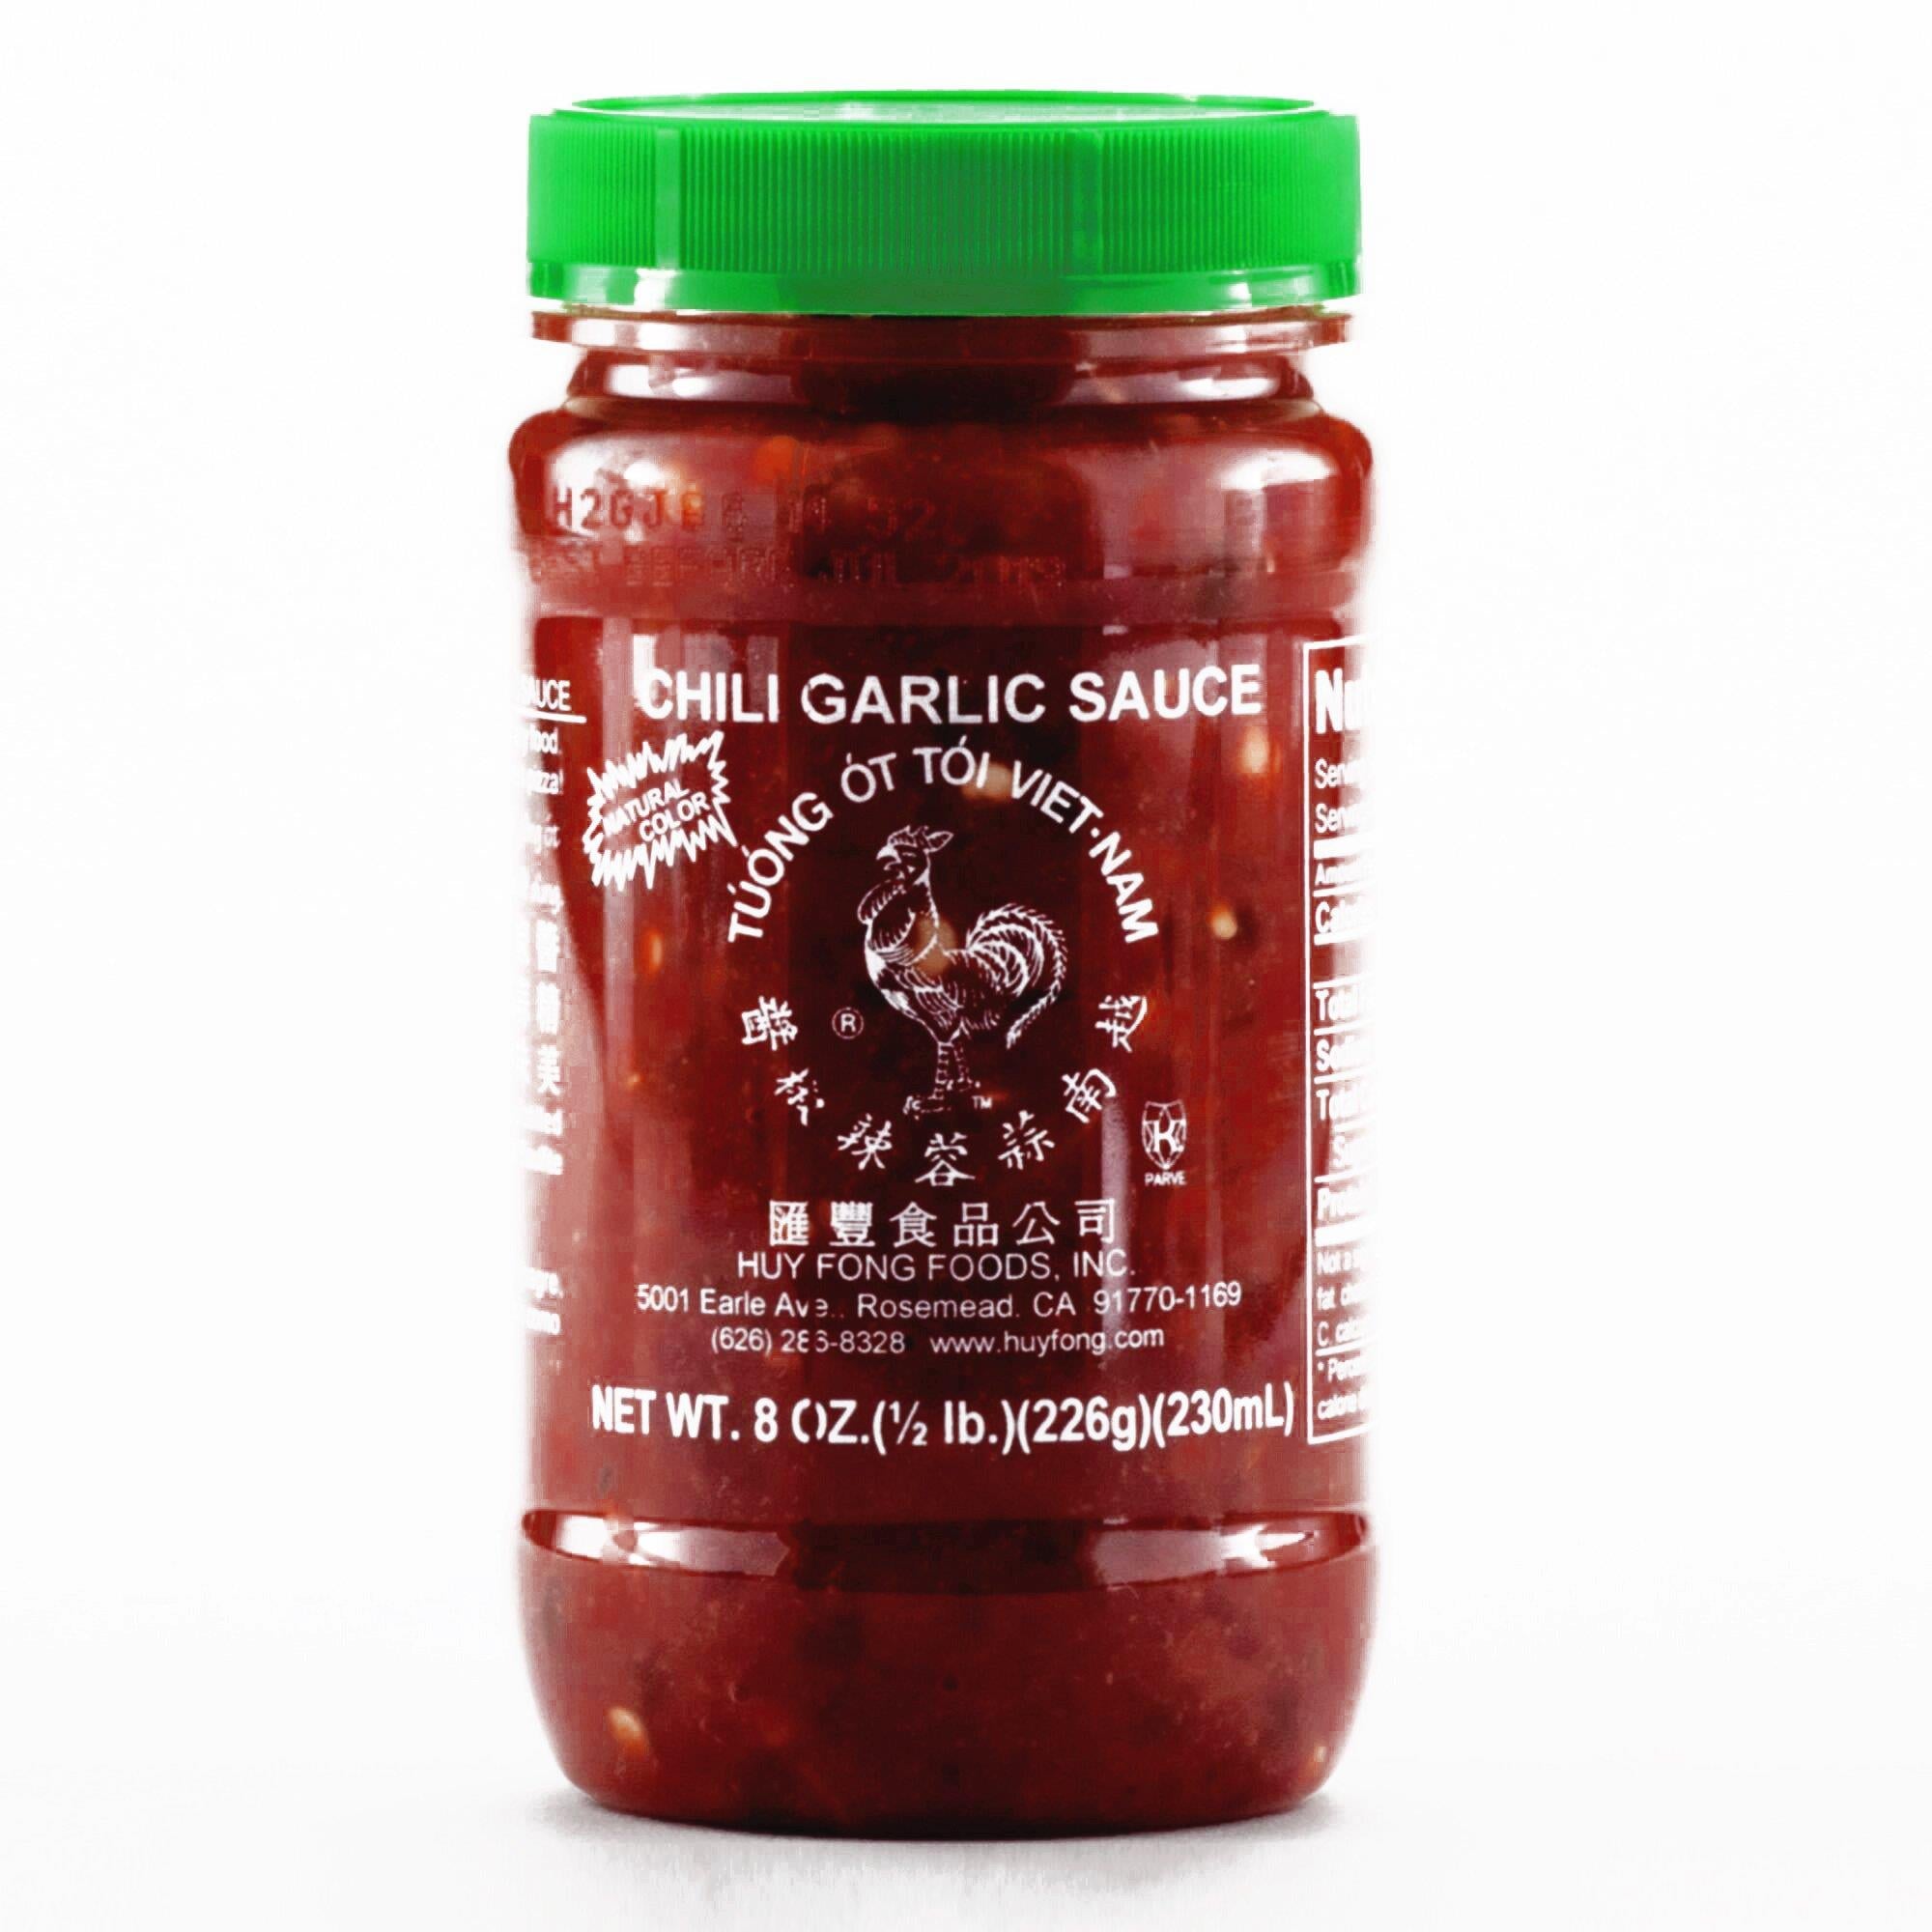 Huy Fong Chili Garlic Sauce 8 oz, Tuong Ot Toi Vietnam